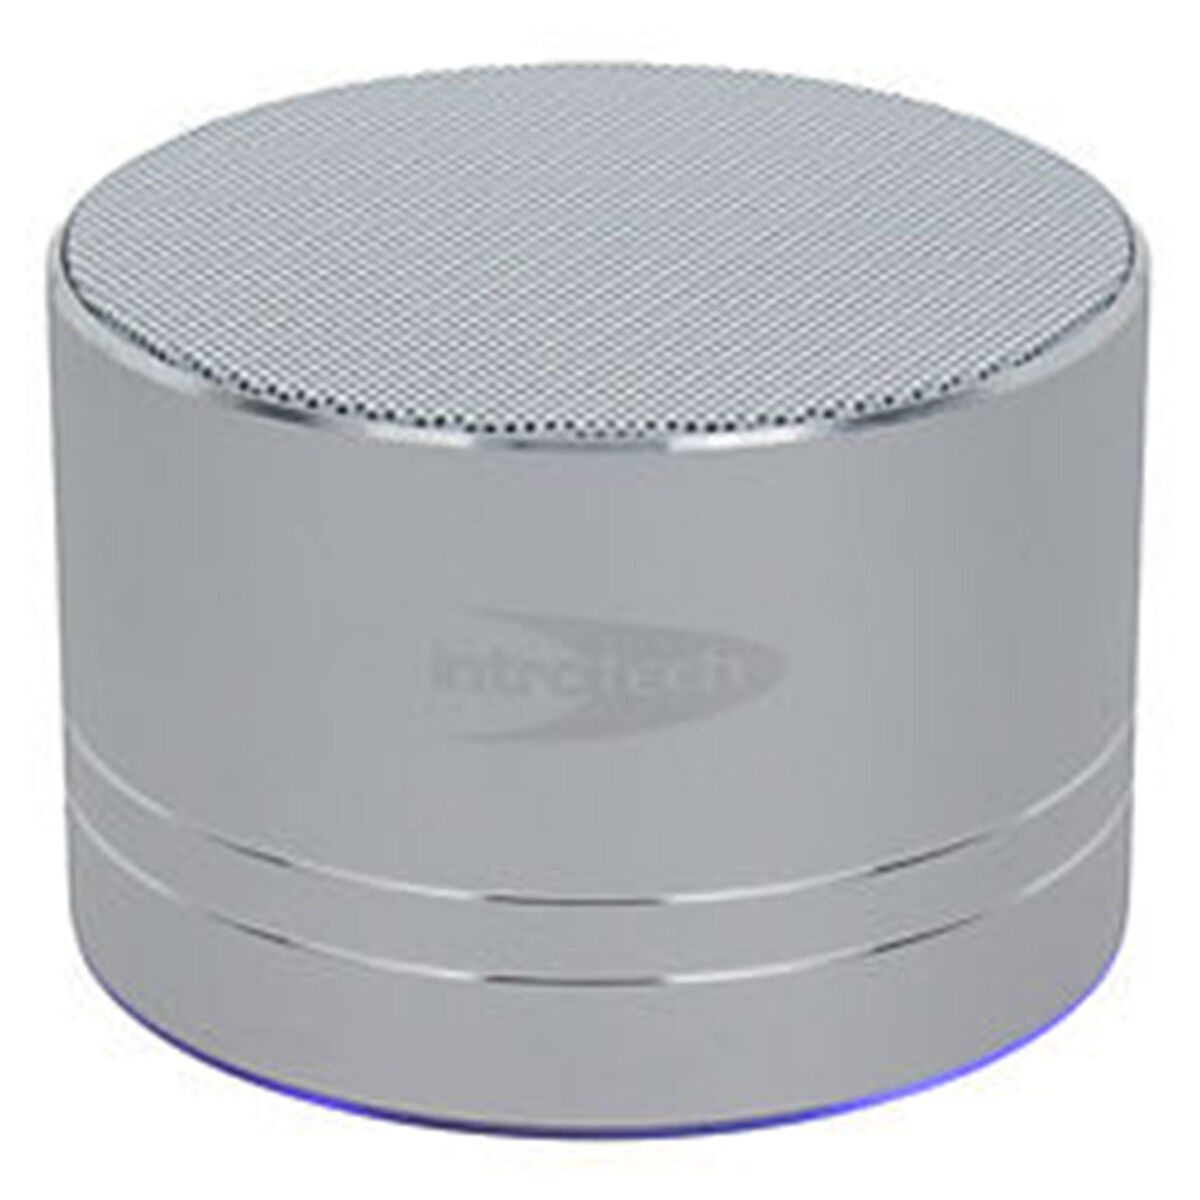 Mini Parlante Bluetooth Introtech Plata